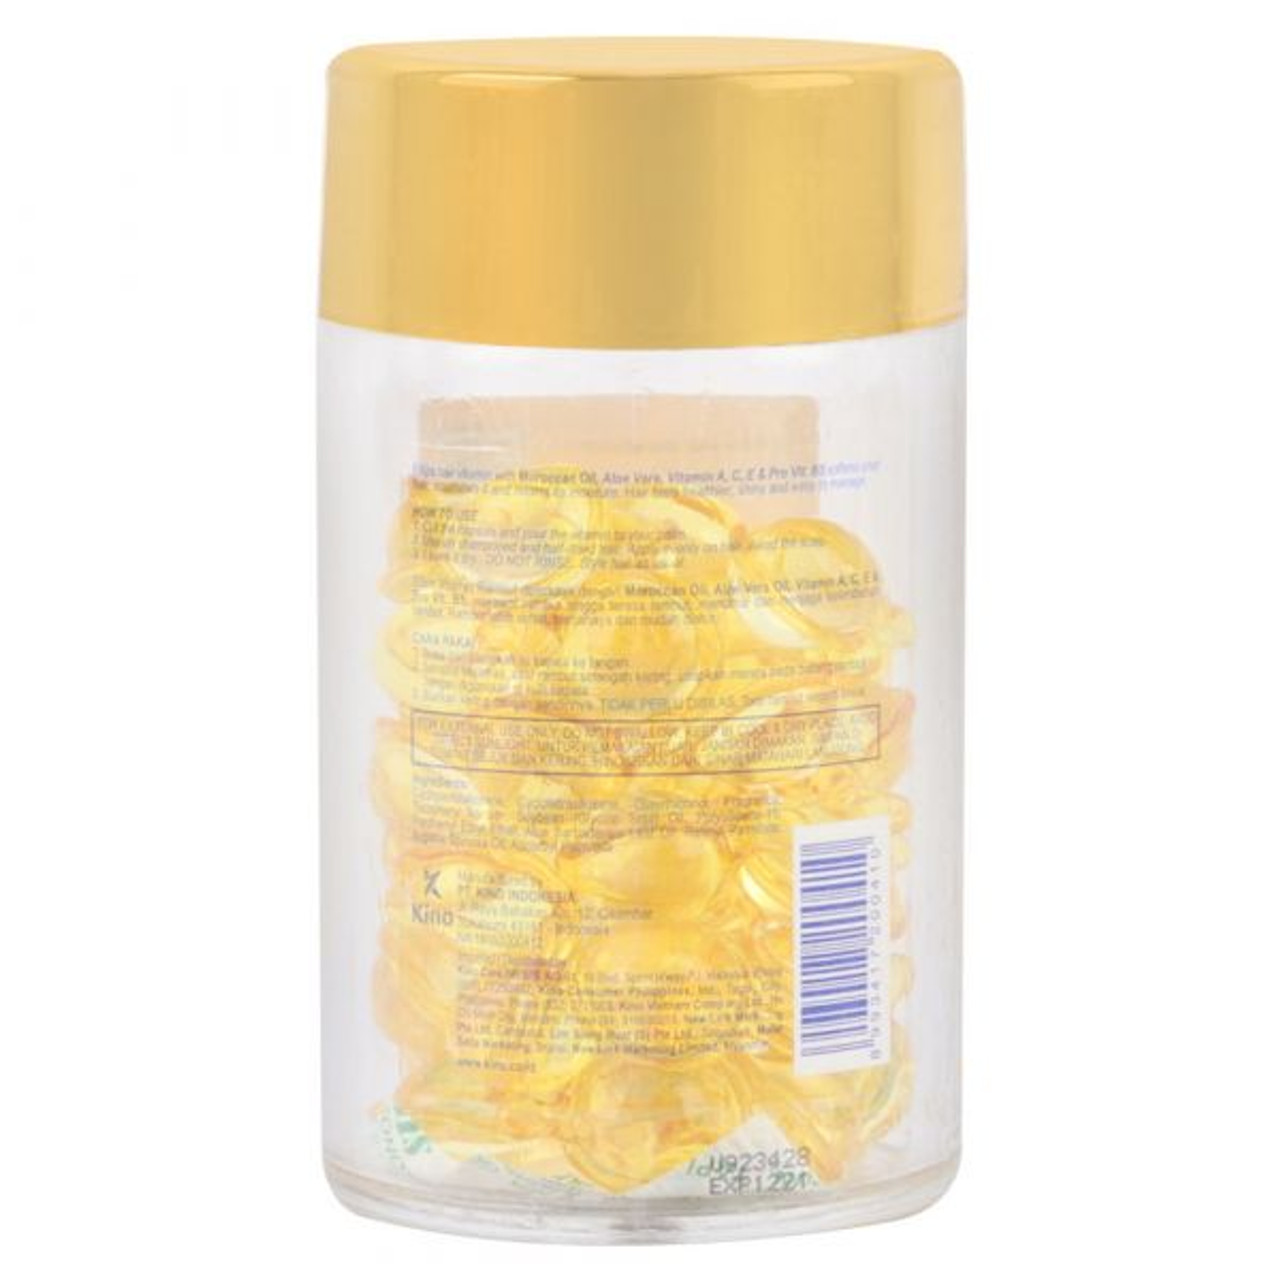  Ellips Hair Vitamin (Smooth & Shiny) EHT-YE (Yellow) 